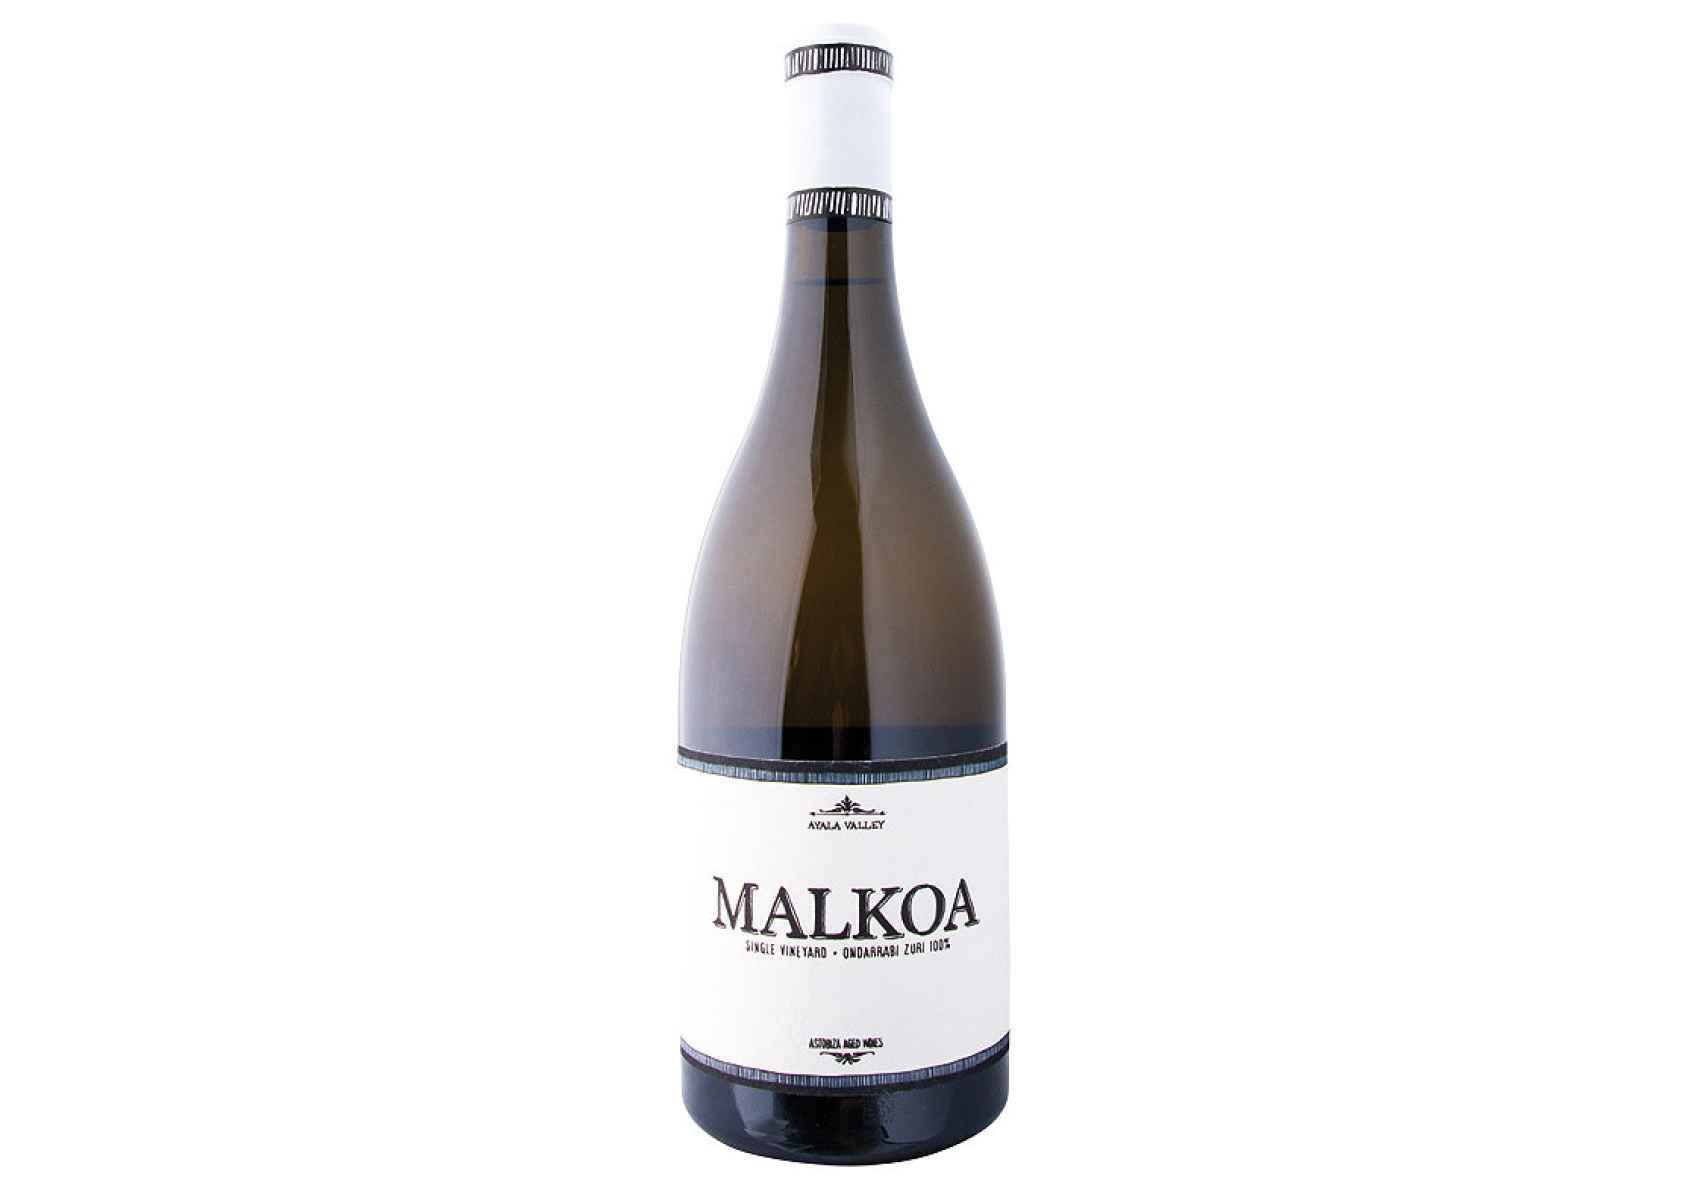 Malkoa by Astobiza